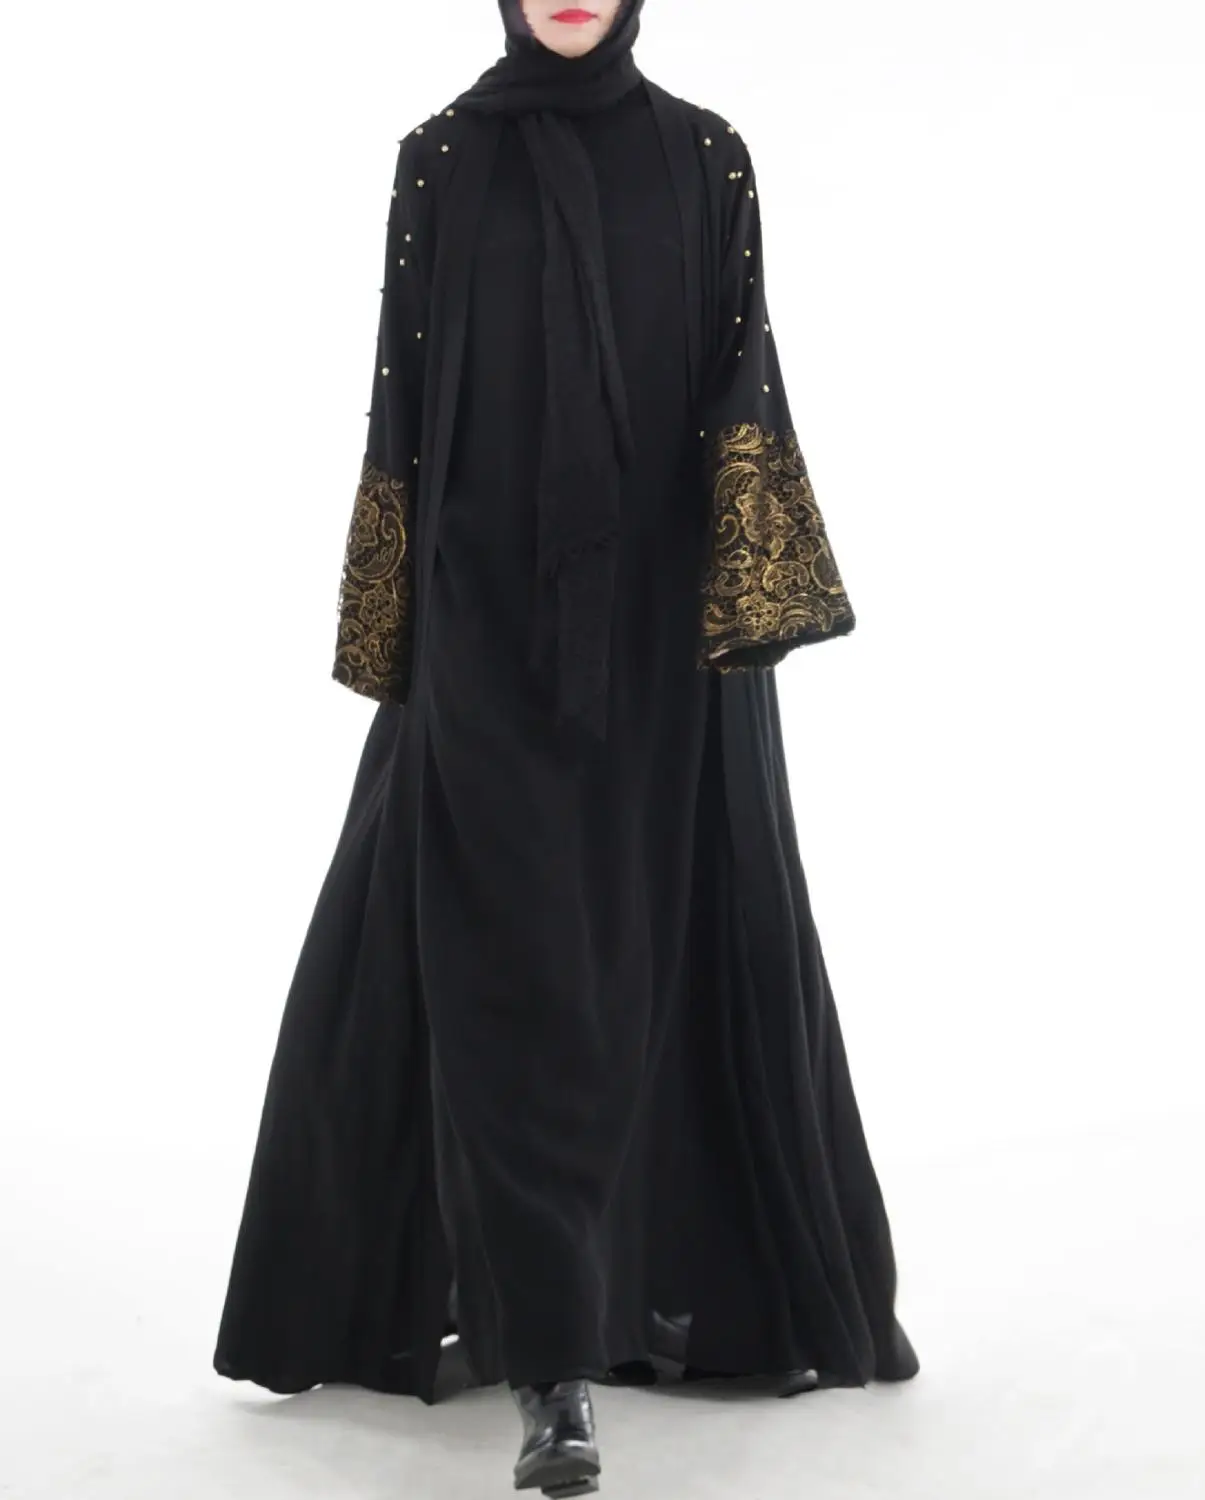 Мусульманская черная Абая, мусульманская одежда для женщин, мусульманская открытая Абая с жемчугом, Дубай, кафтан, платье, Турецкая Абая, му...